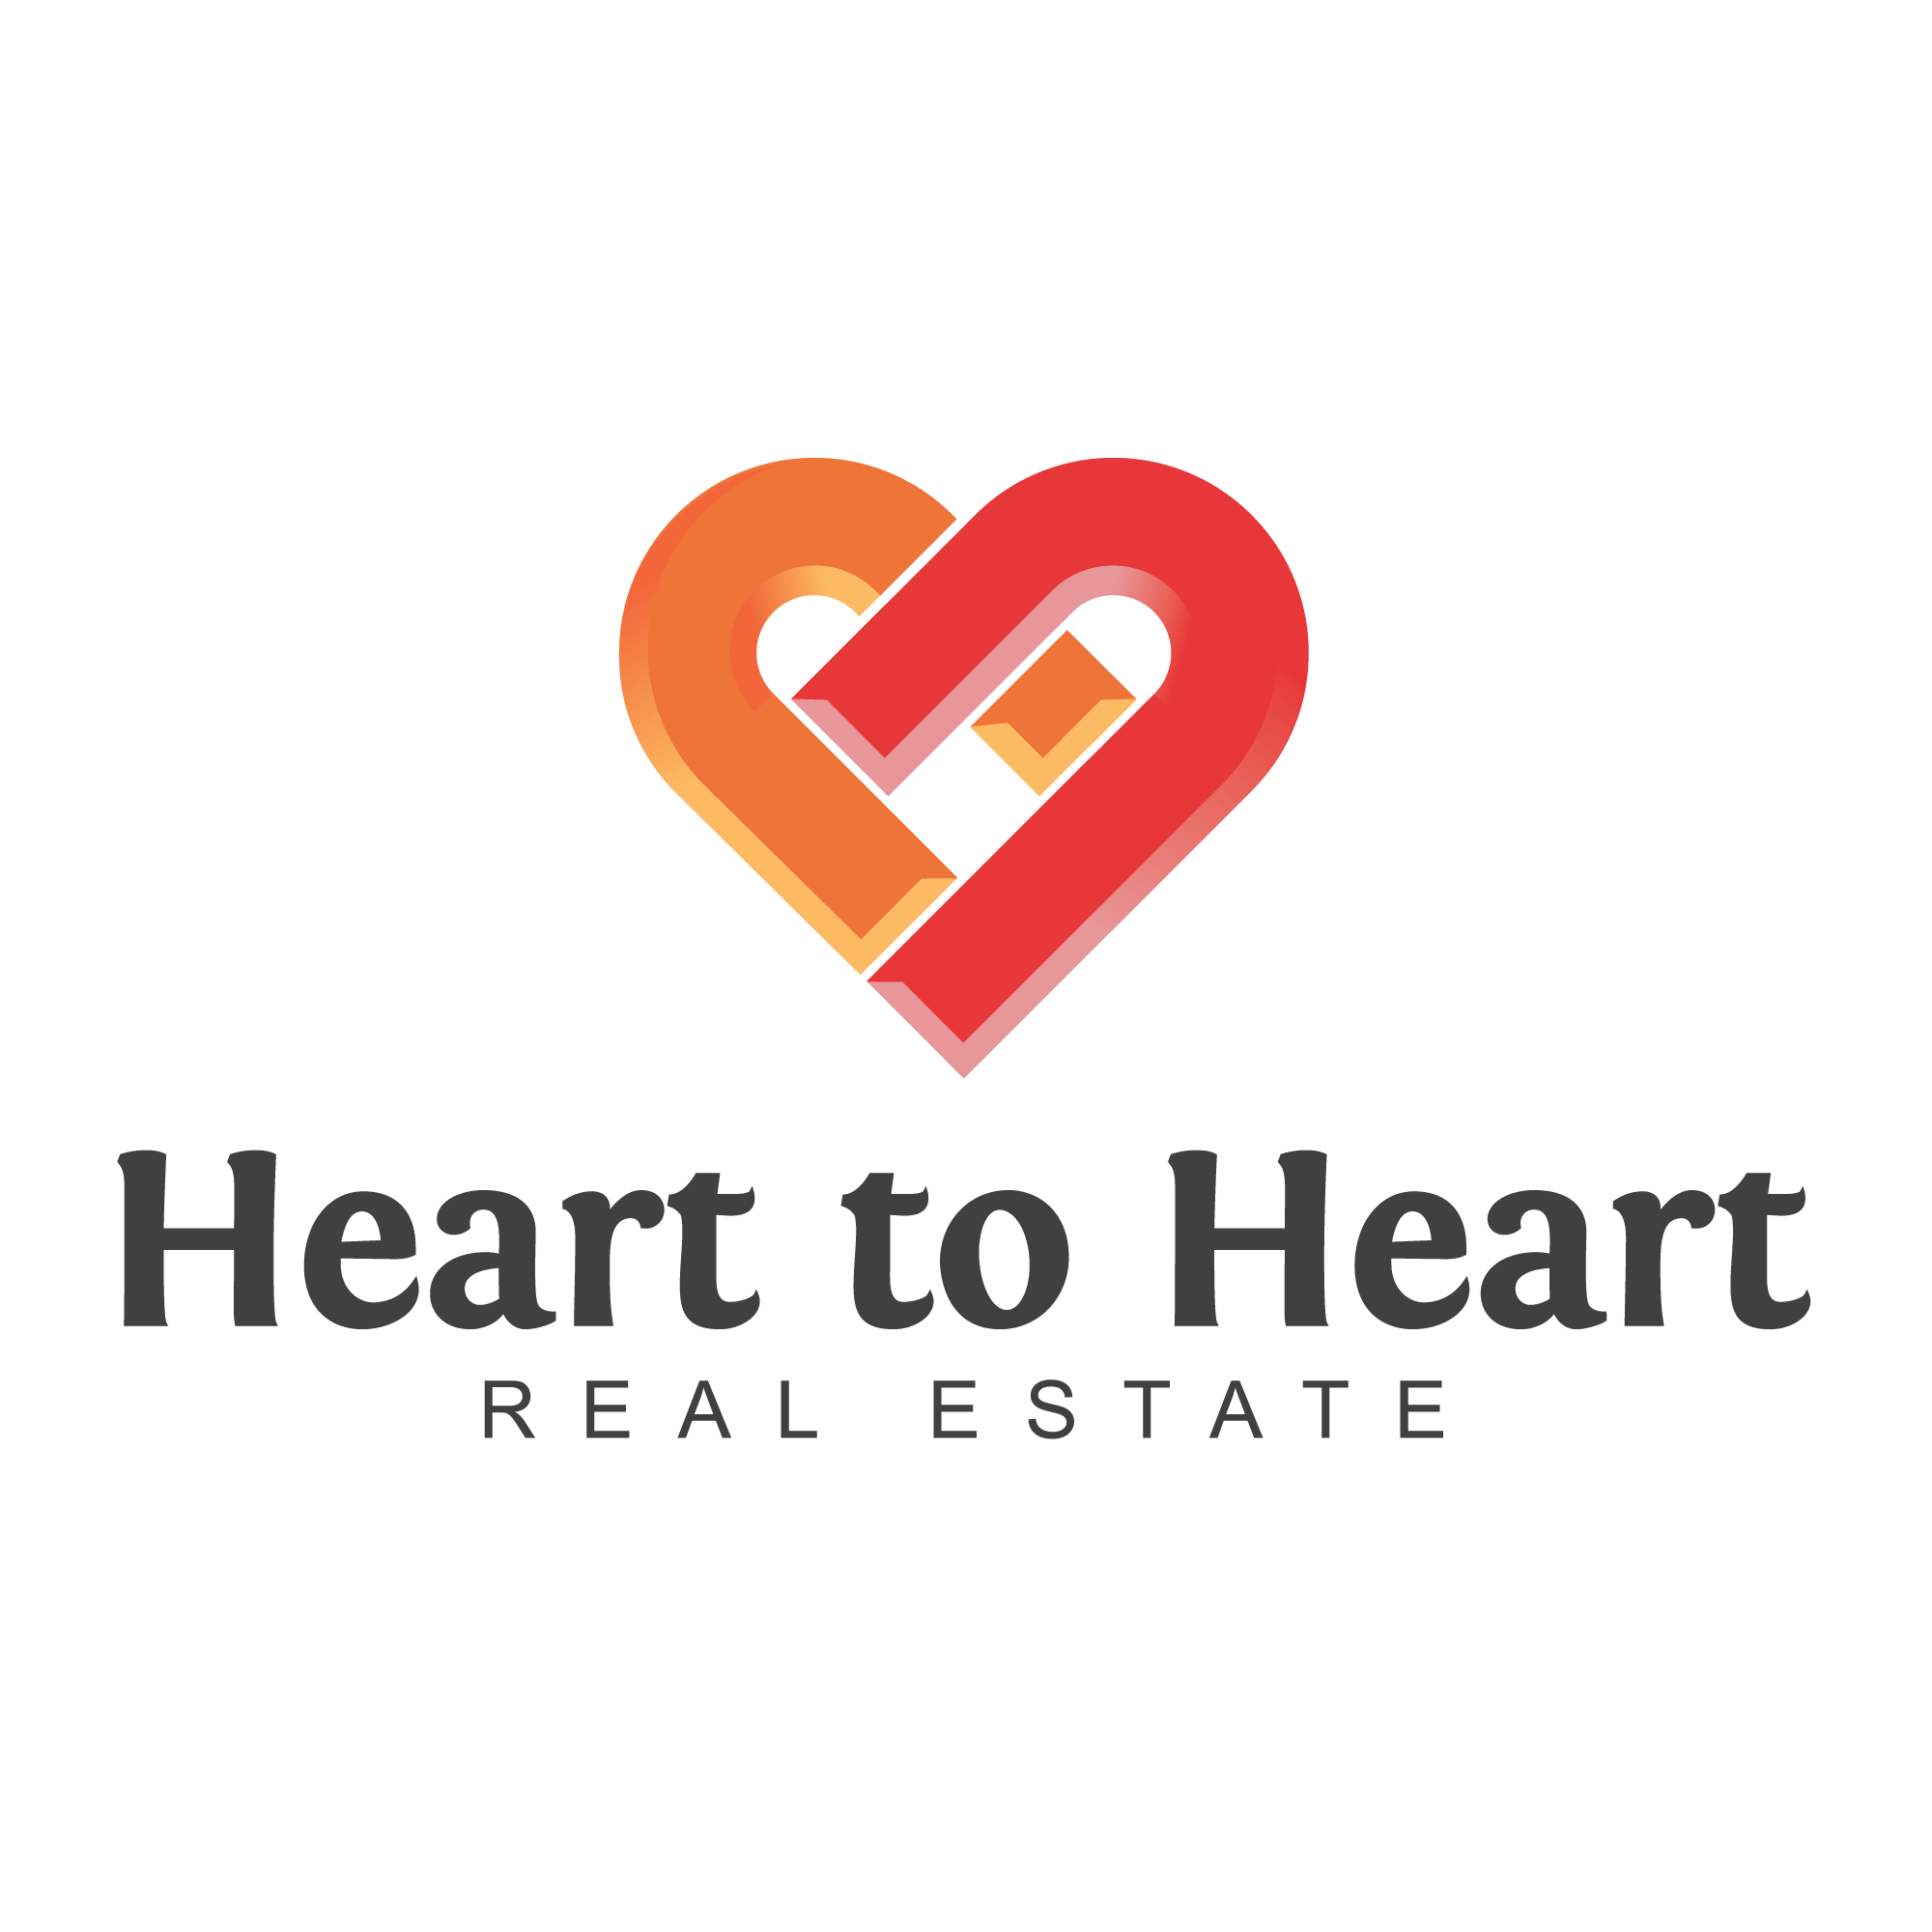 Heart to Heart Logo - Heart to Heart Real Estate | Restorative Partners